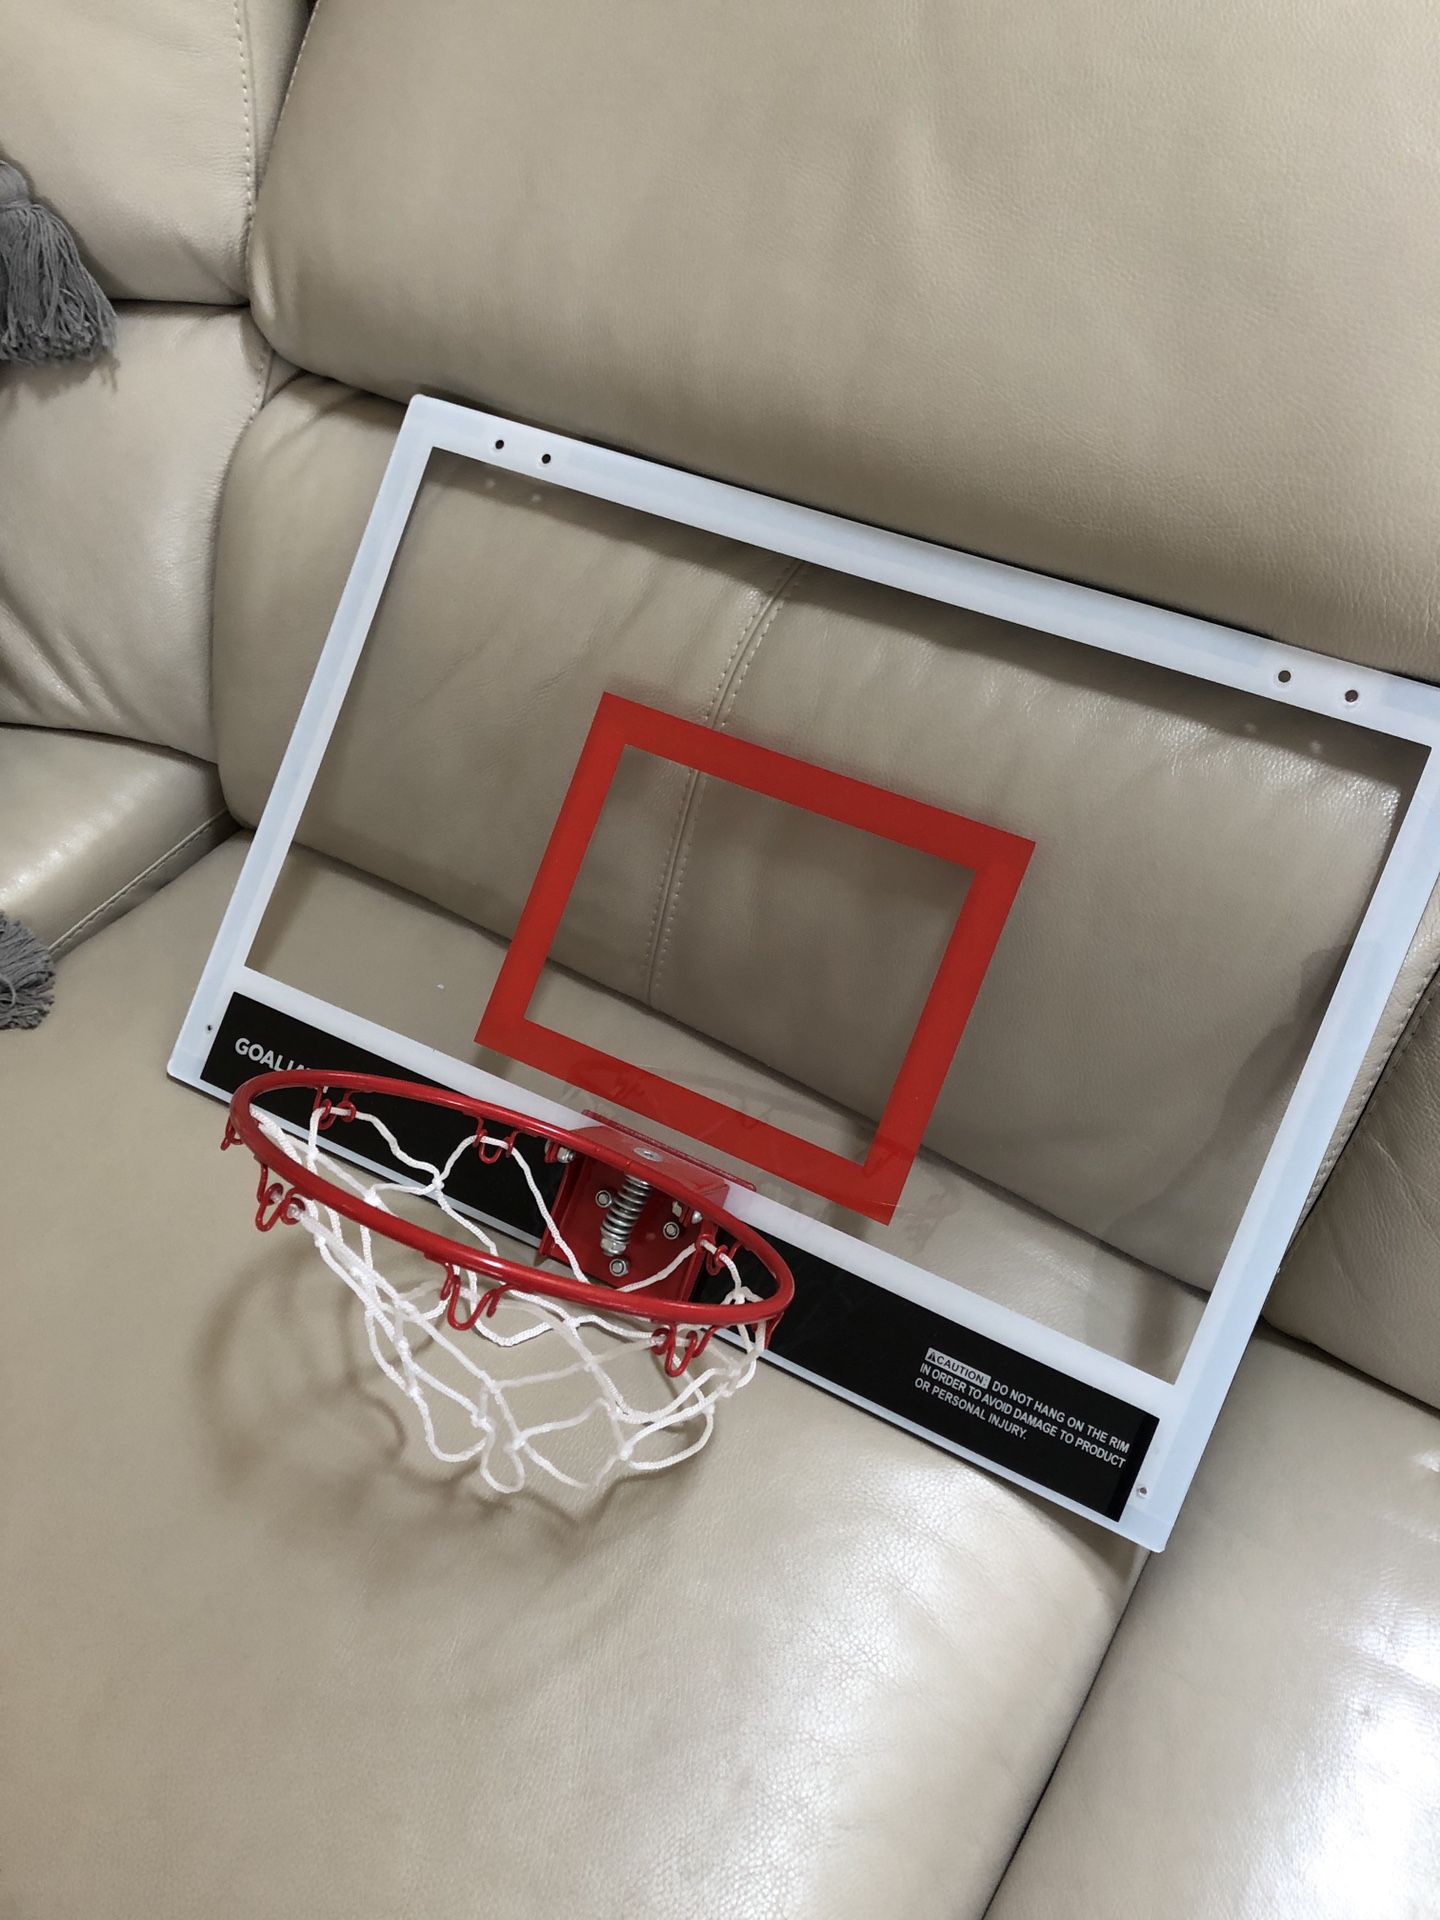 Basketball Hoop For Kids Bedrooms 